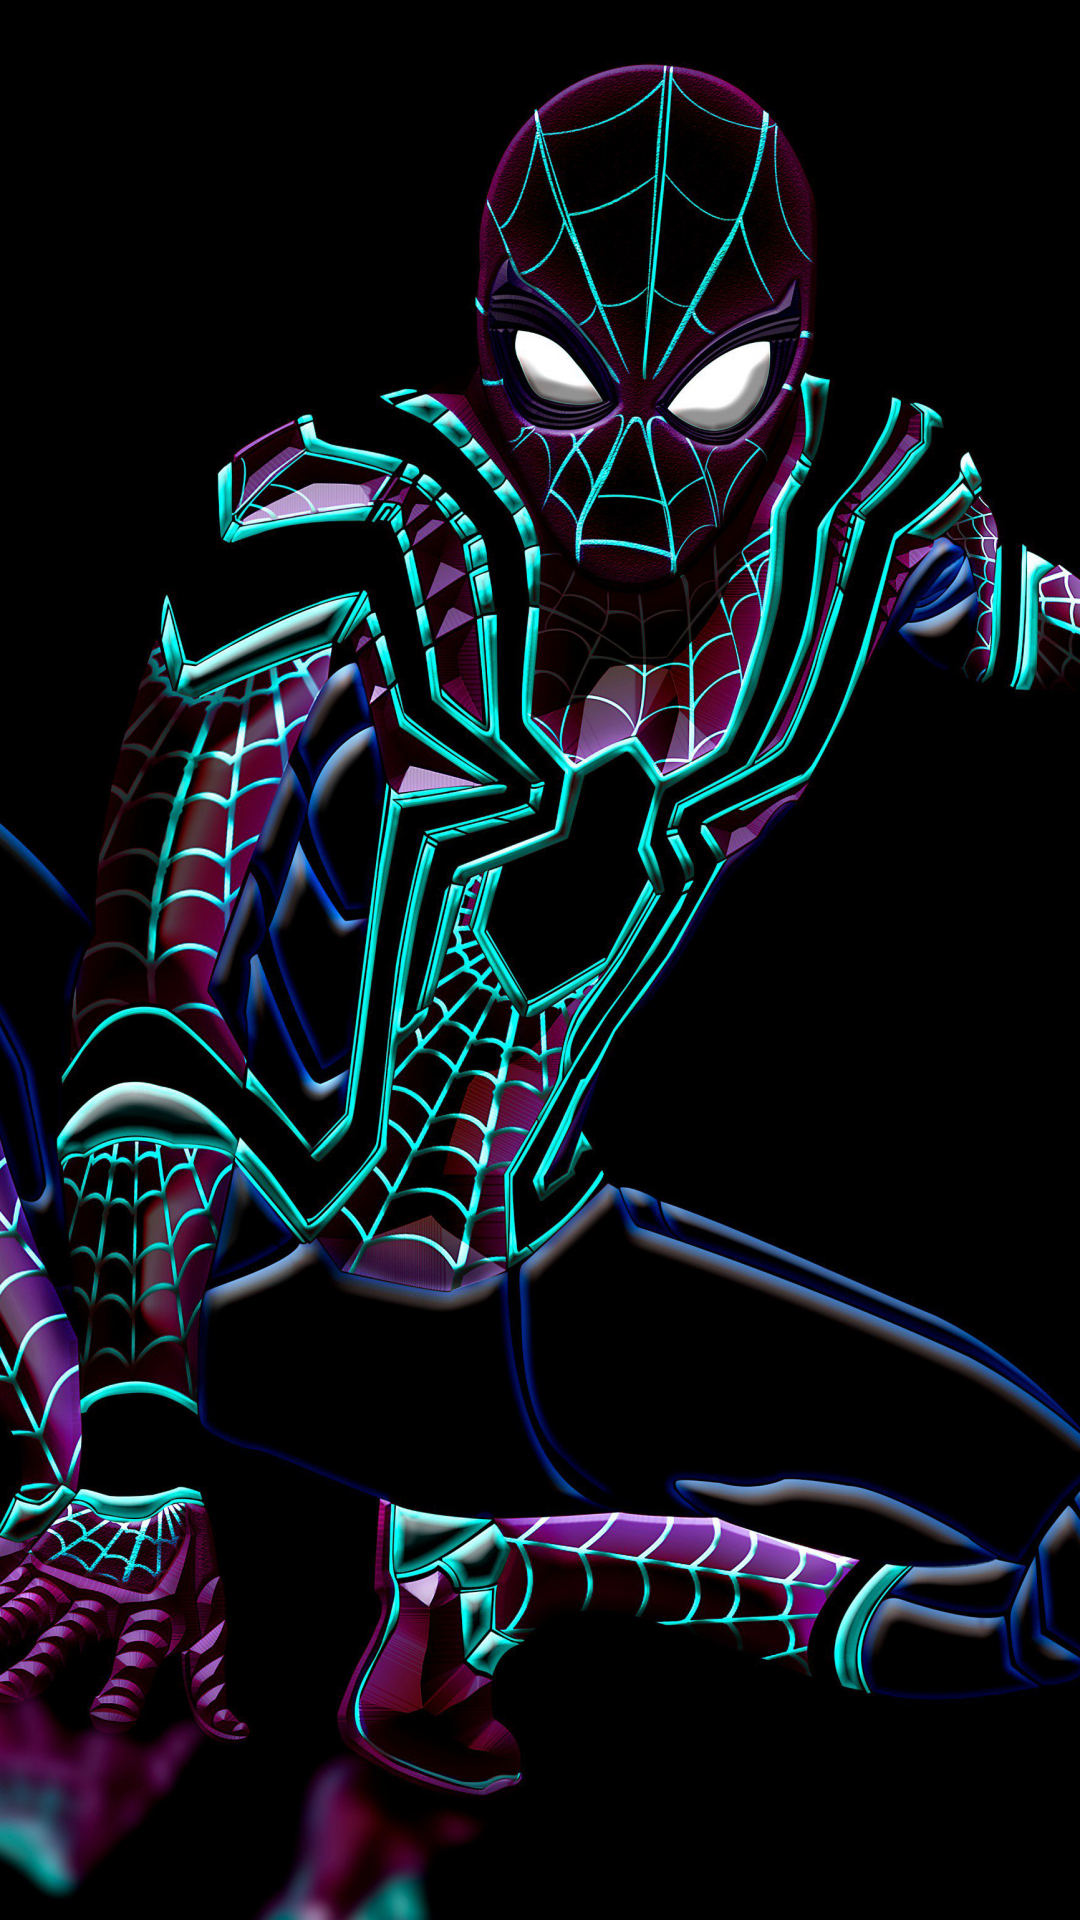 Spider-Man Wallpaper 4K, Neon art, Black background, Marvel Superheroes